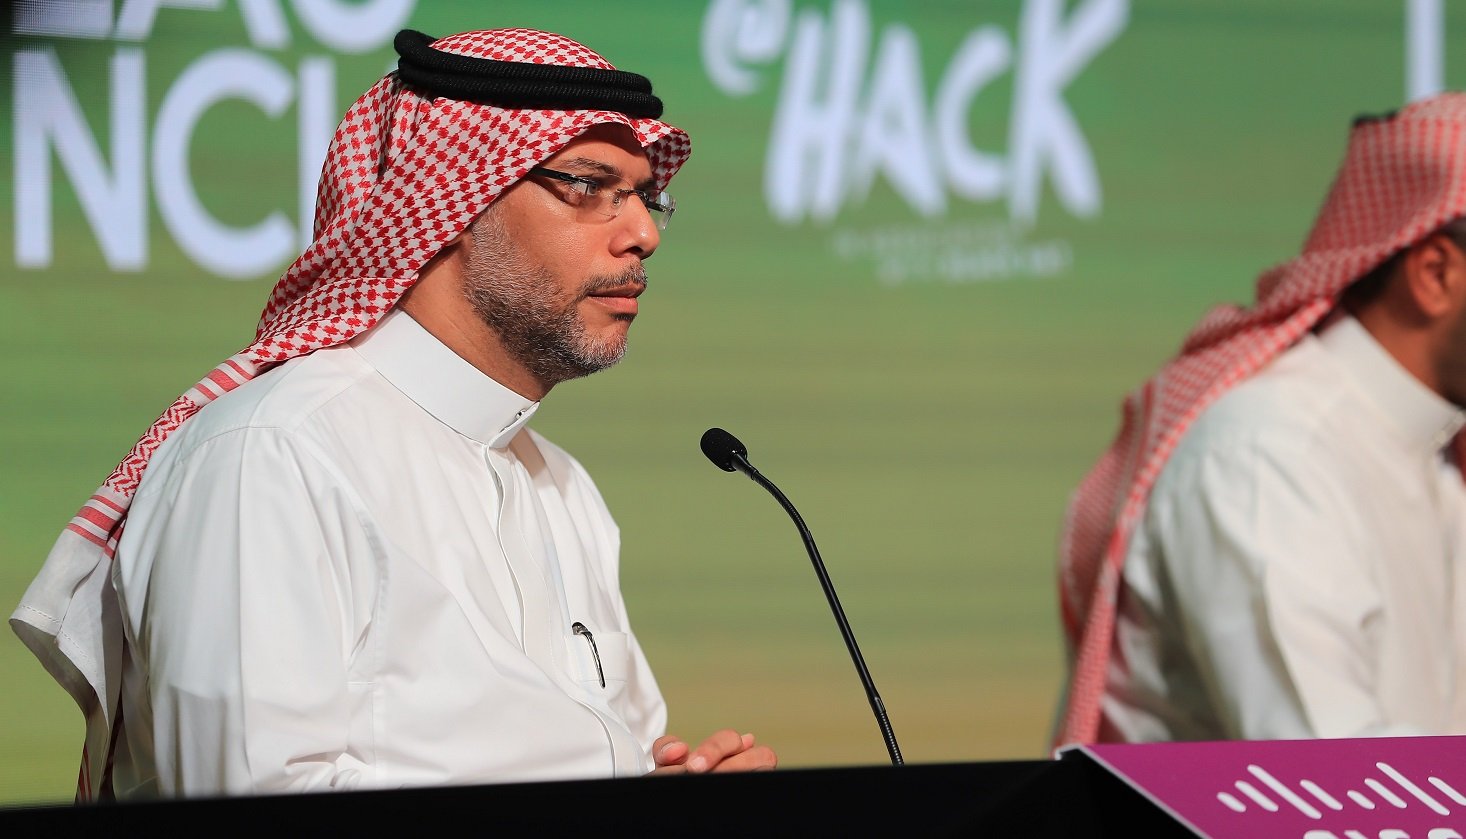 Salman Abdulghani Faqeeh, Managing Director, Saudi Arabia at Cisco